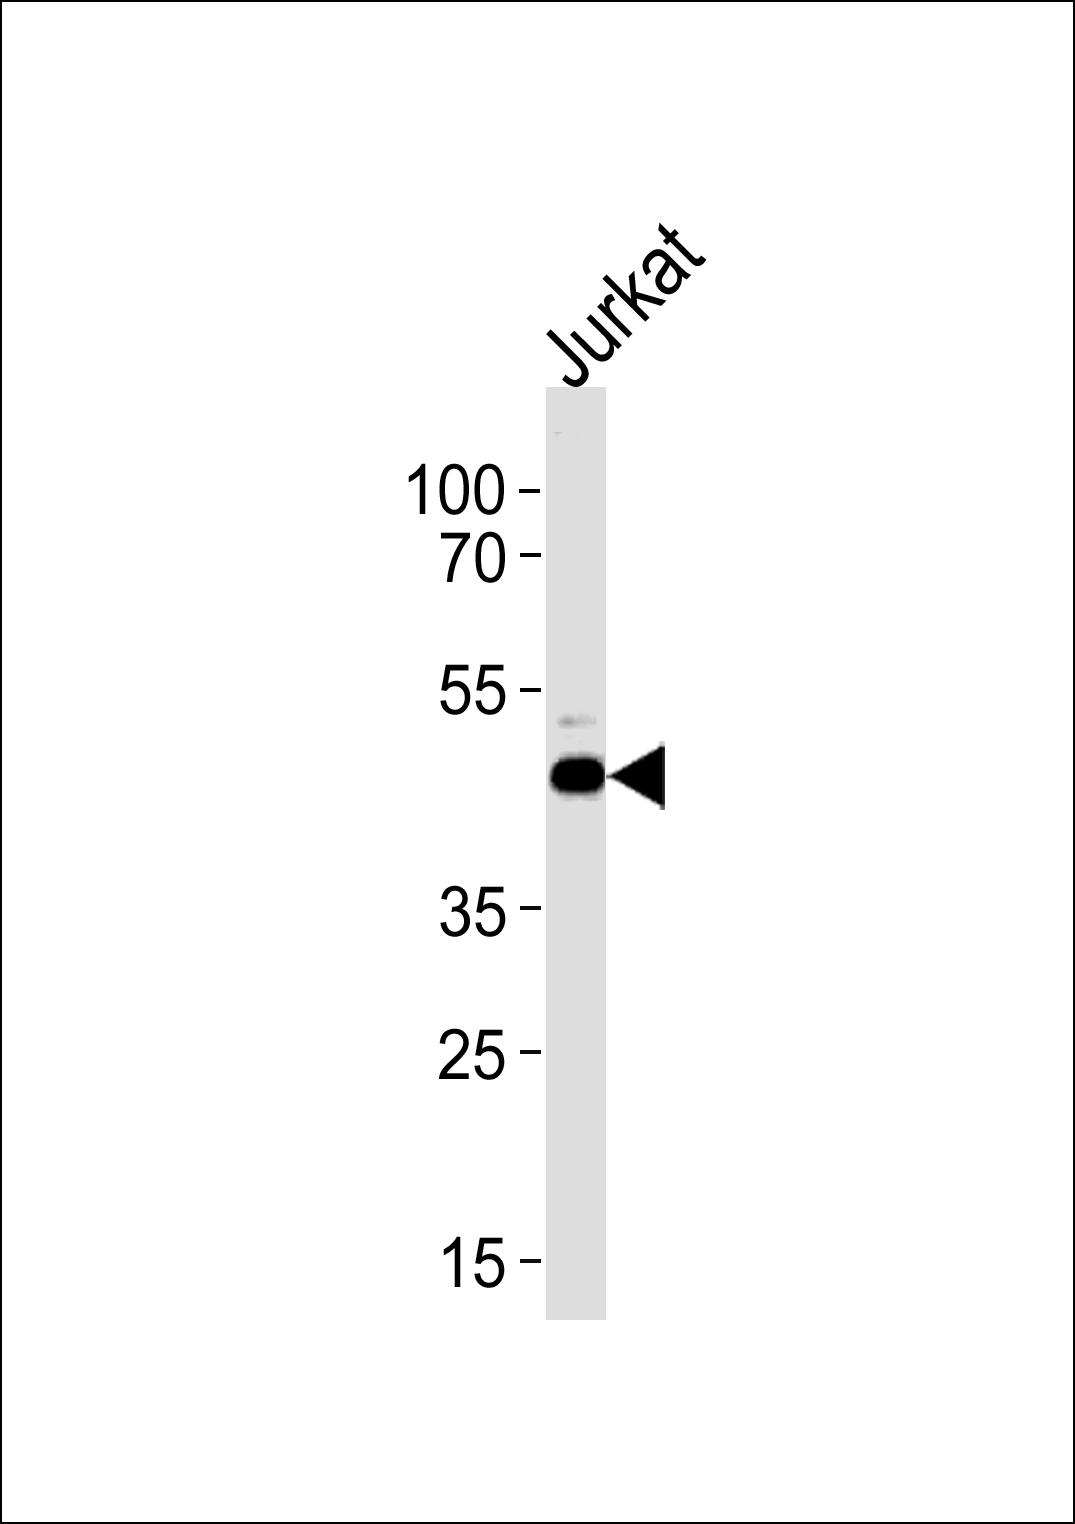 ATG4B Antibody (Center) (Cat. #AP20544c) western blot analysis in Jurkat cell line lysates (35ug/lane).This demonstrates the ATG4B antibody detected the ATG4B protein (arrow).